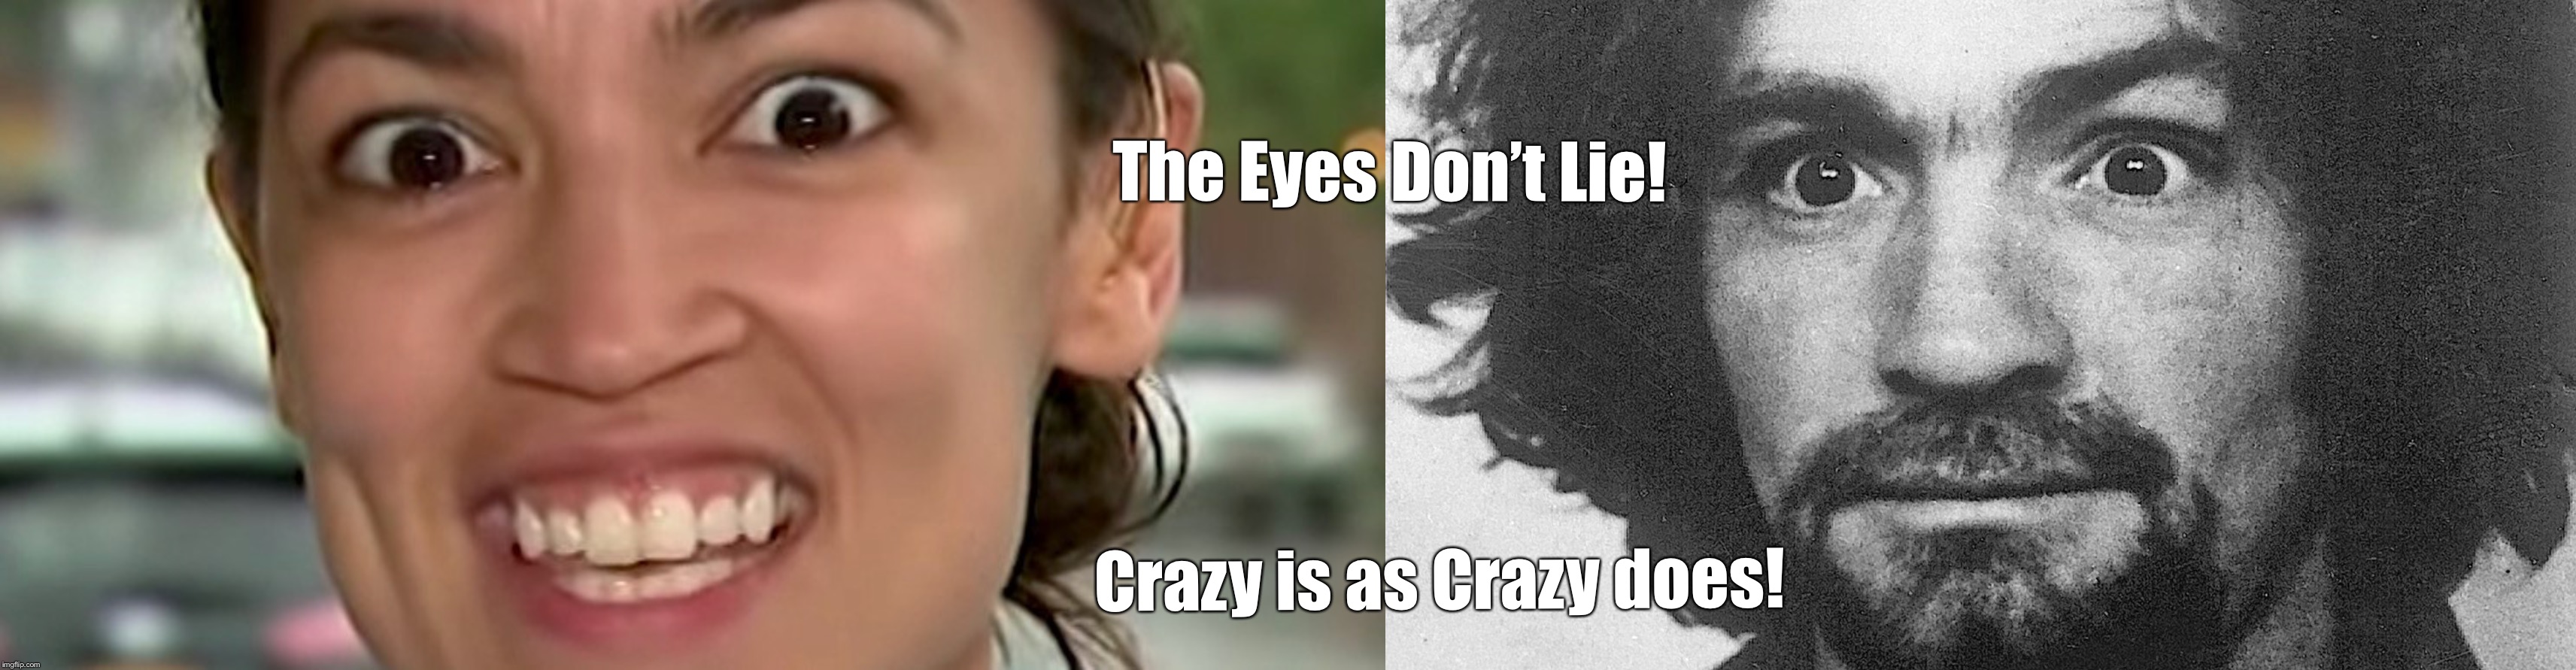 Congresswoman Crazy Eyes | The Eyes Don’t Lie! Crazy is as Crazy does! | image tagged in charles manson,alexandria ocasio-cortez,crazy alexandria ocasio-cortez,democrats | made w/ Imgflip meme maker